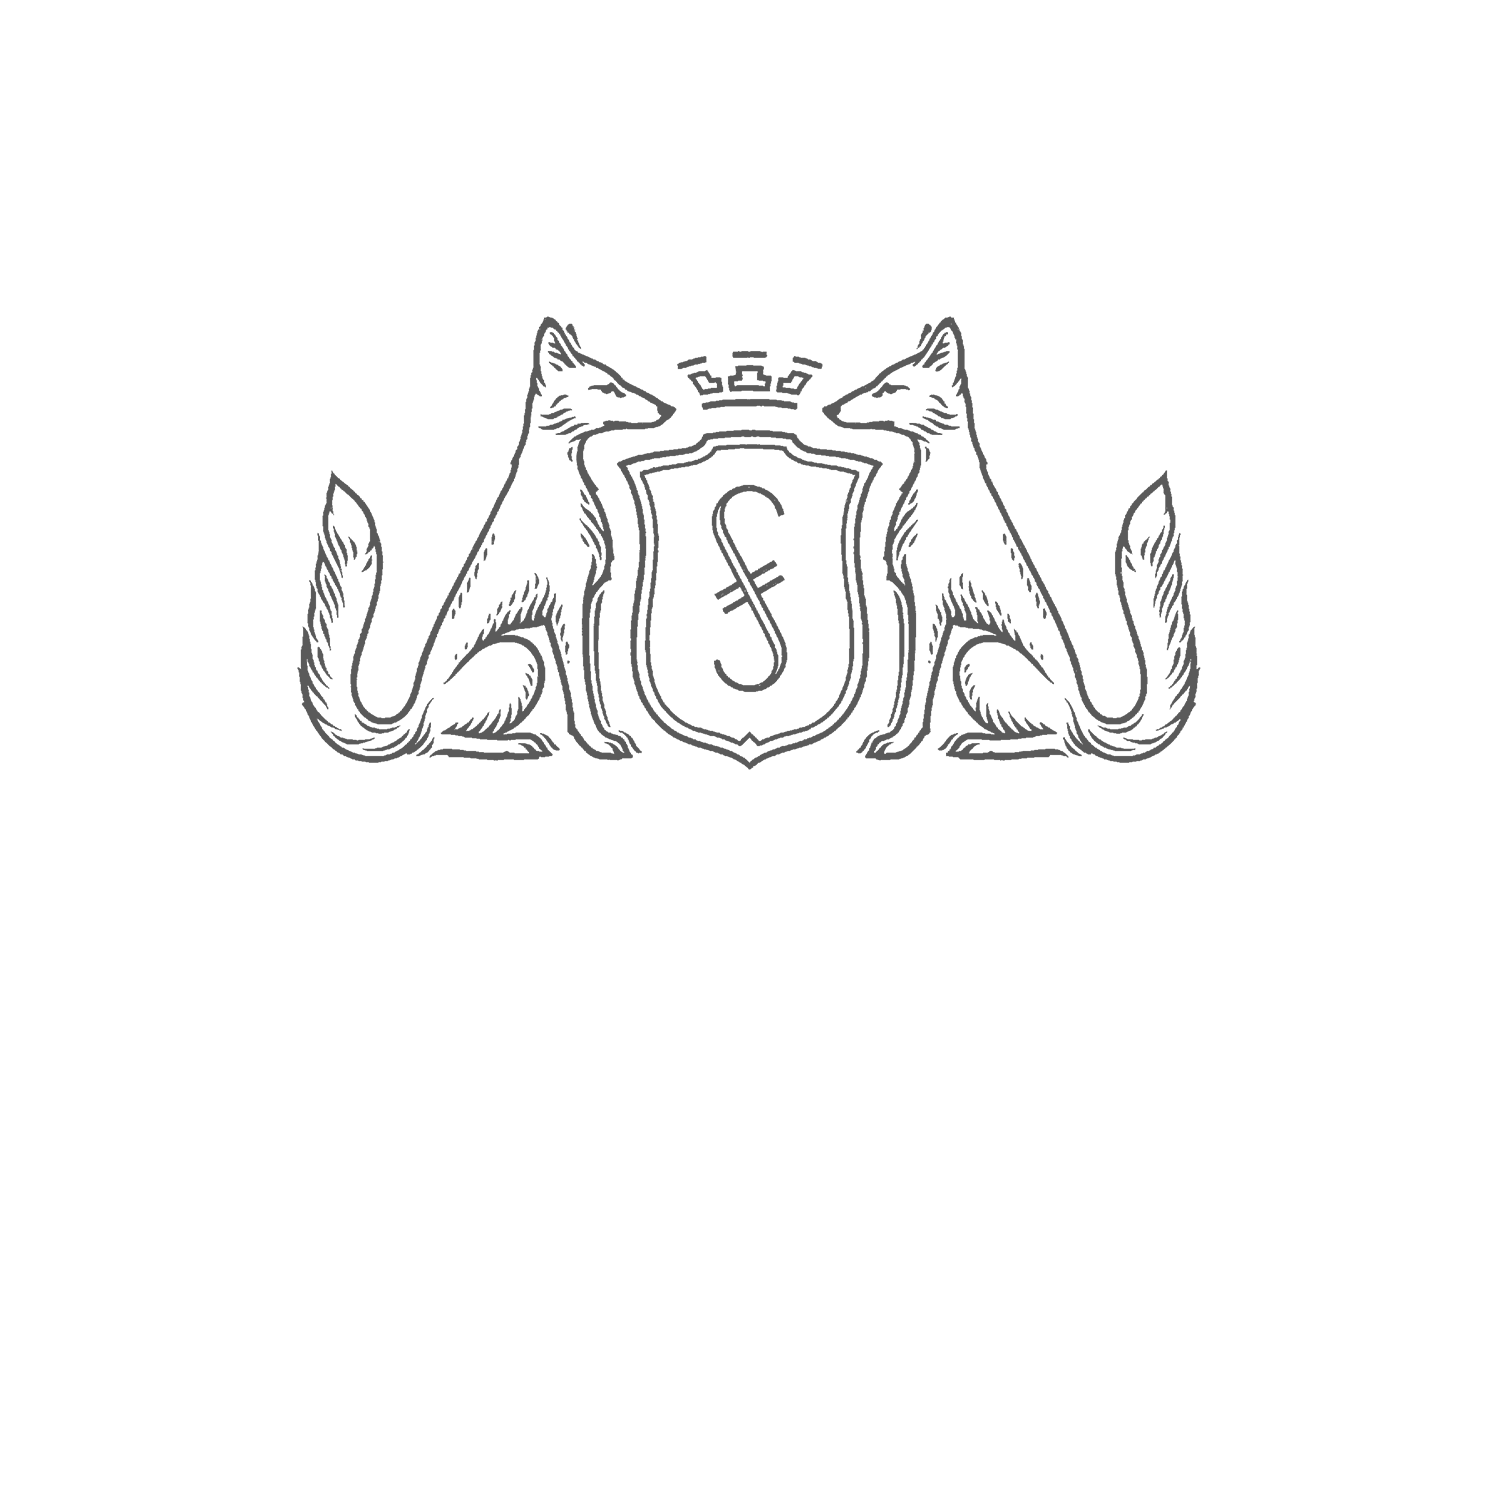 Steven Fox Jewelry Photo